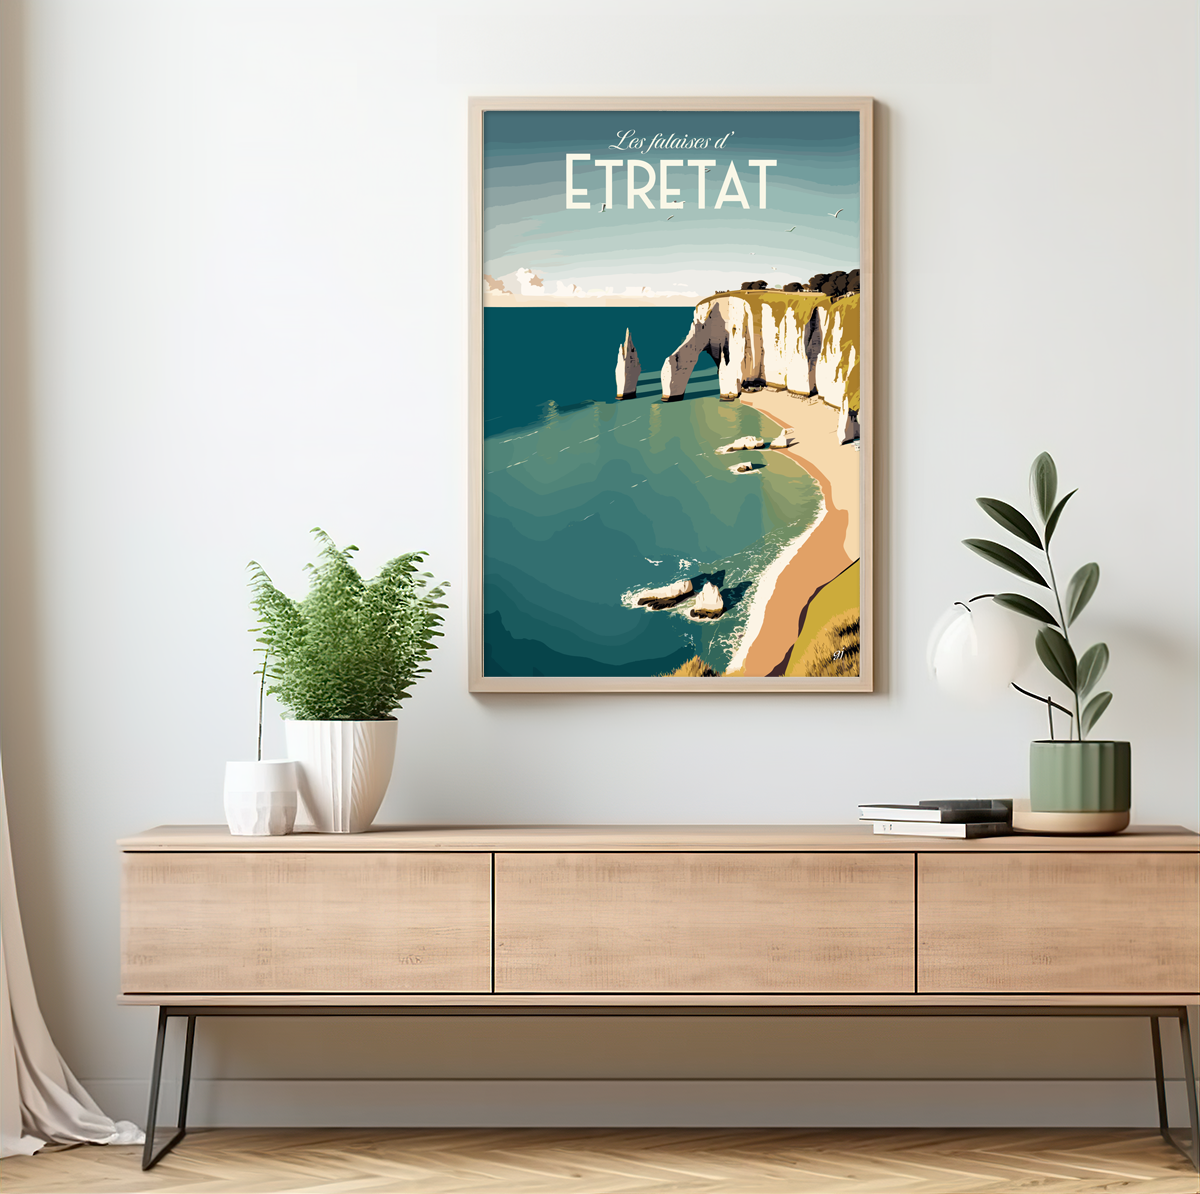 Etretat poster by bon voyage design